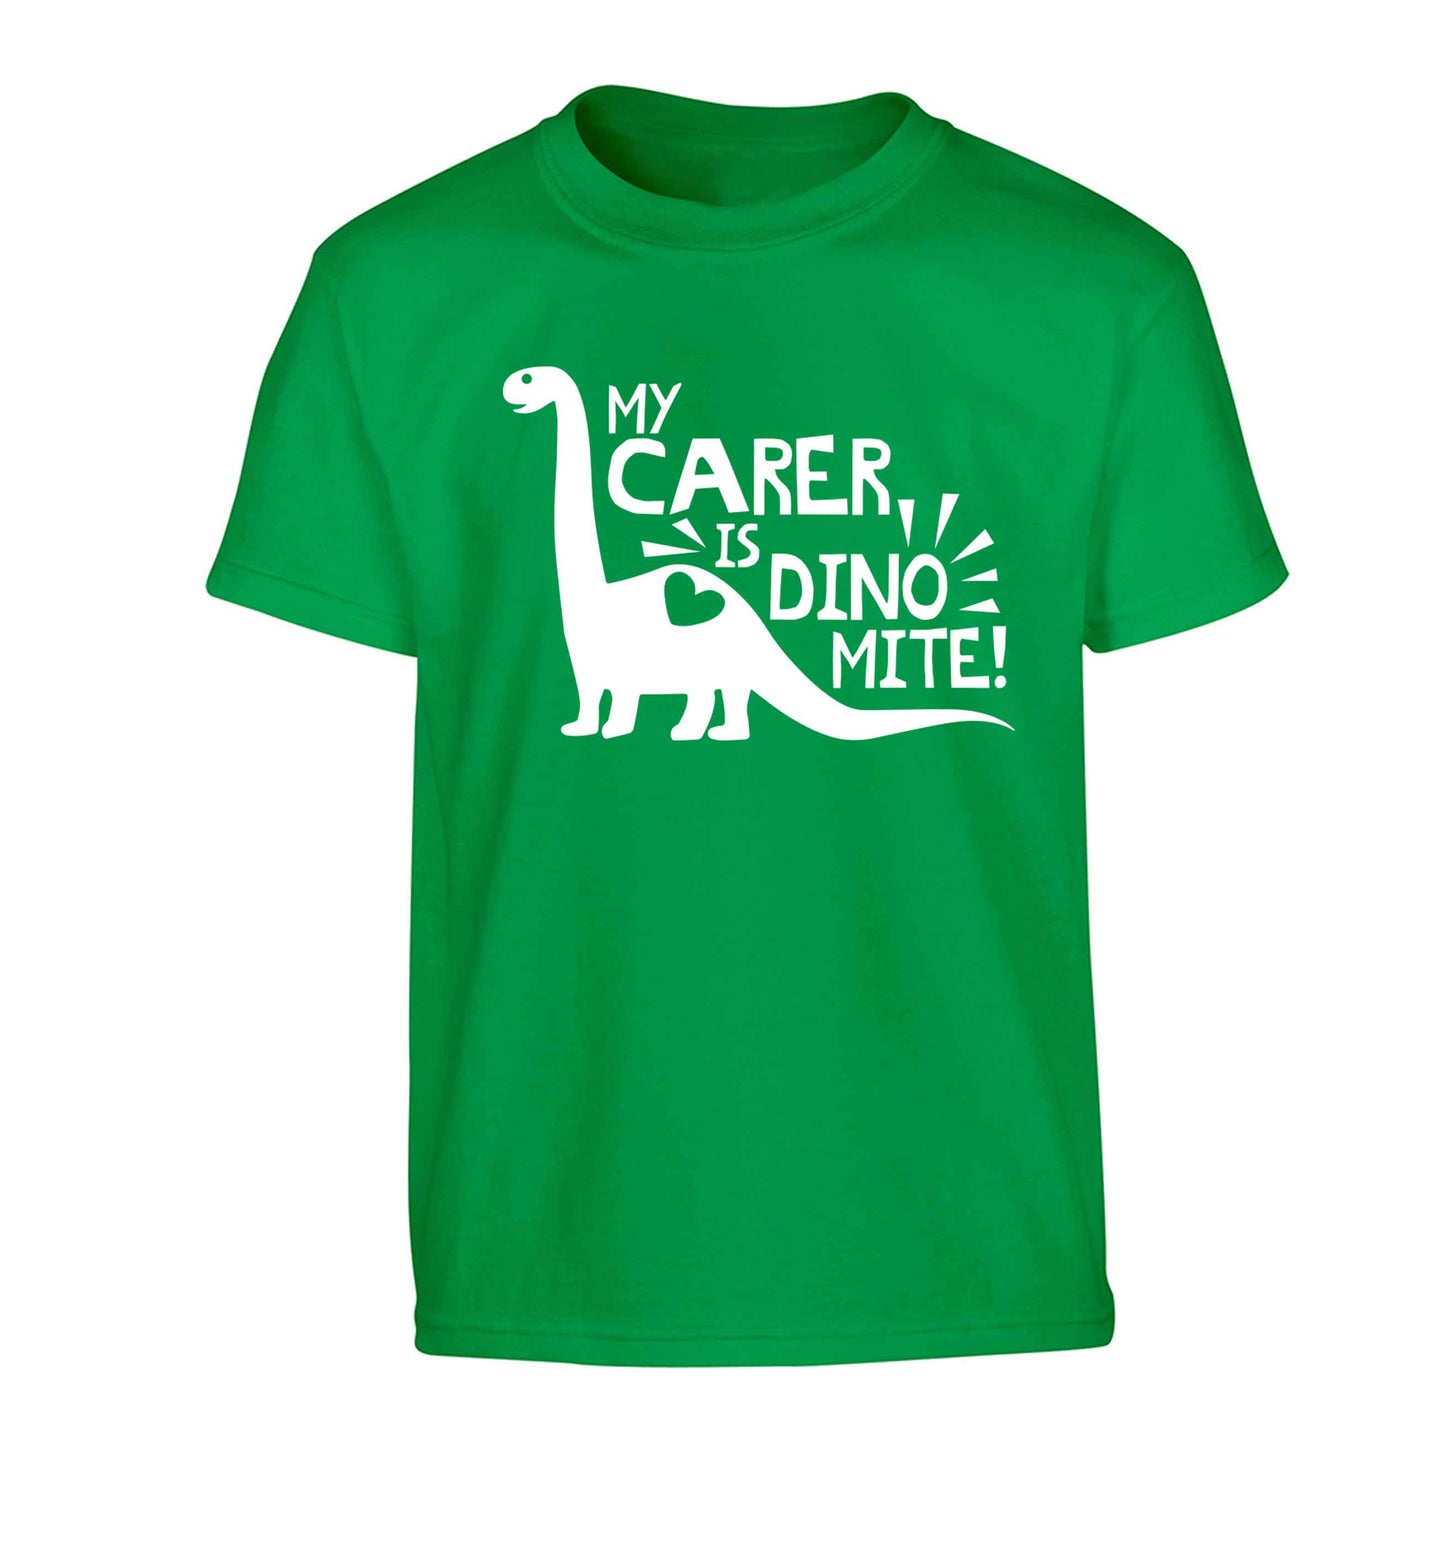 My carer is dinomite! Children's green Tshirt 12-13 Years